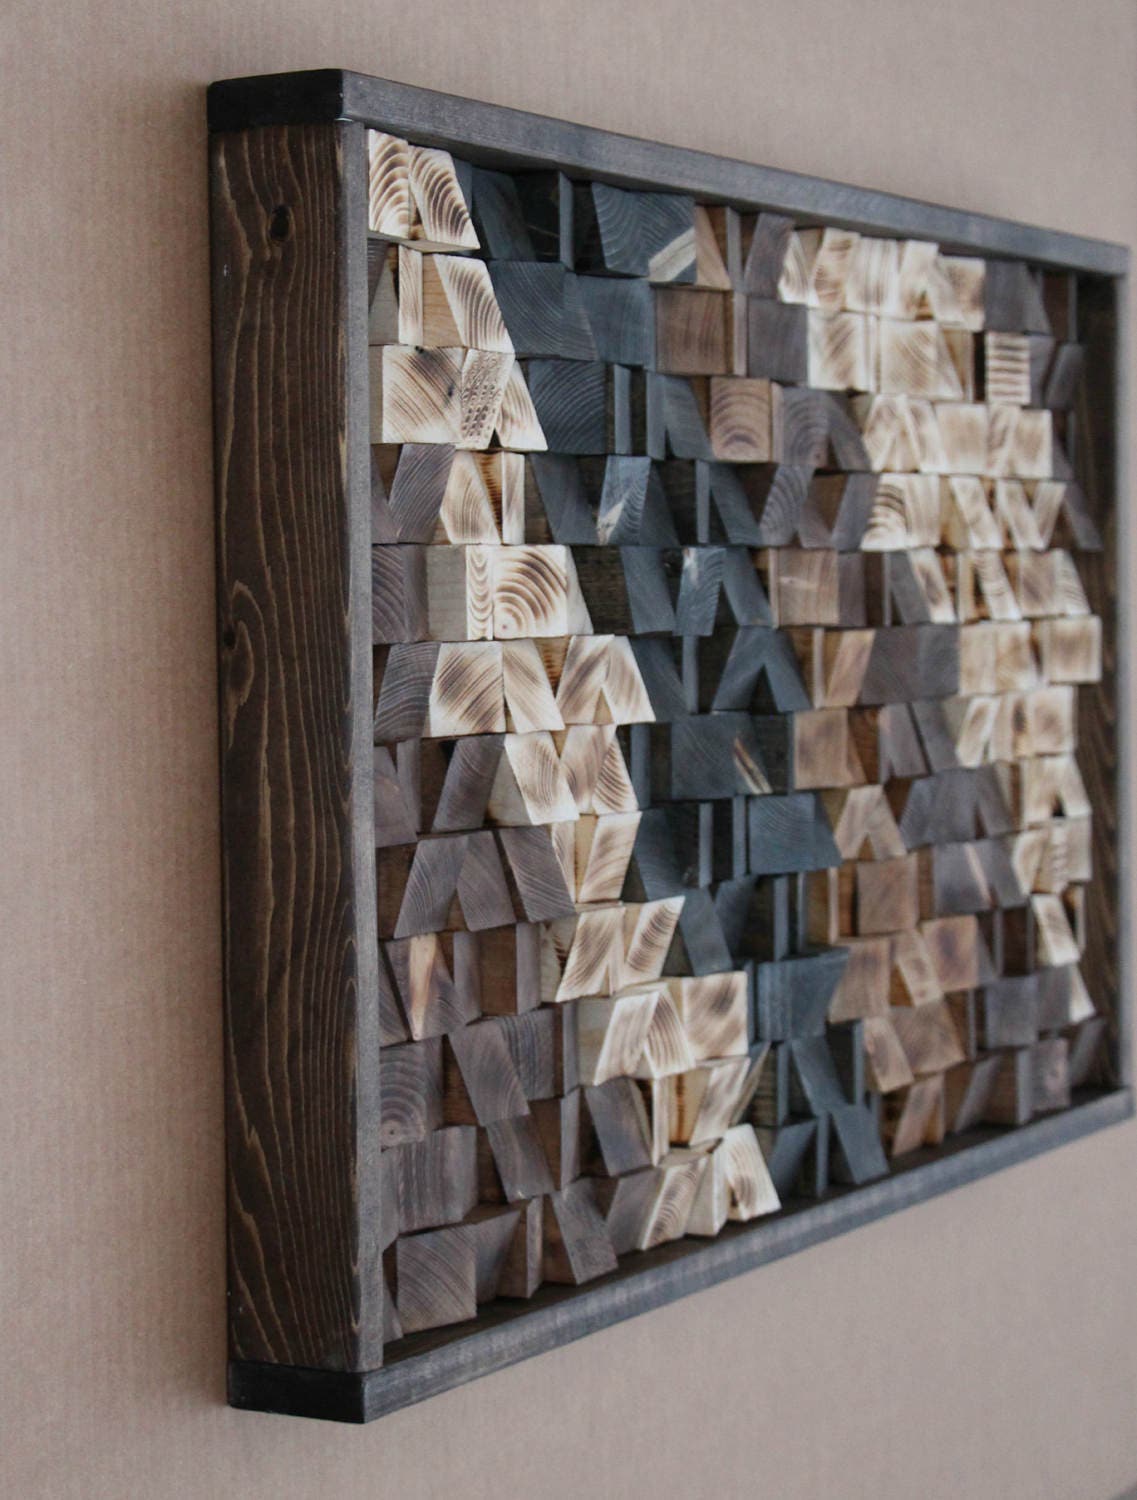 Large Reclaimed Wood Wall Art, Wood Wall Decor, Headboard, Geometric Pattern, Wood mosaic, Geometric art, 17x30